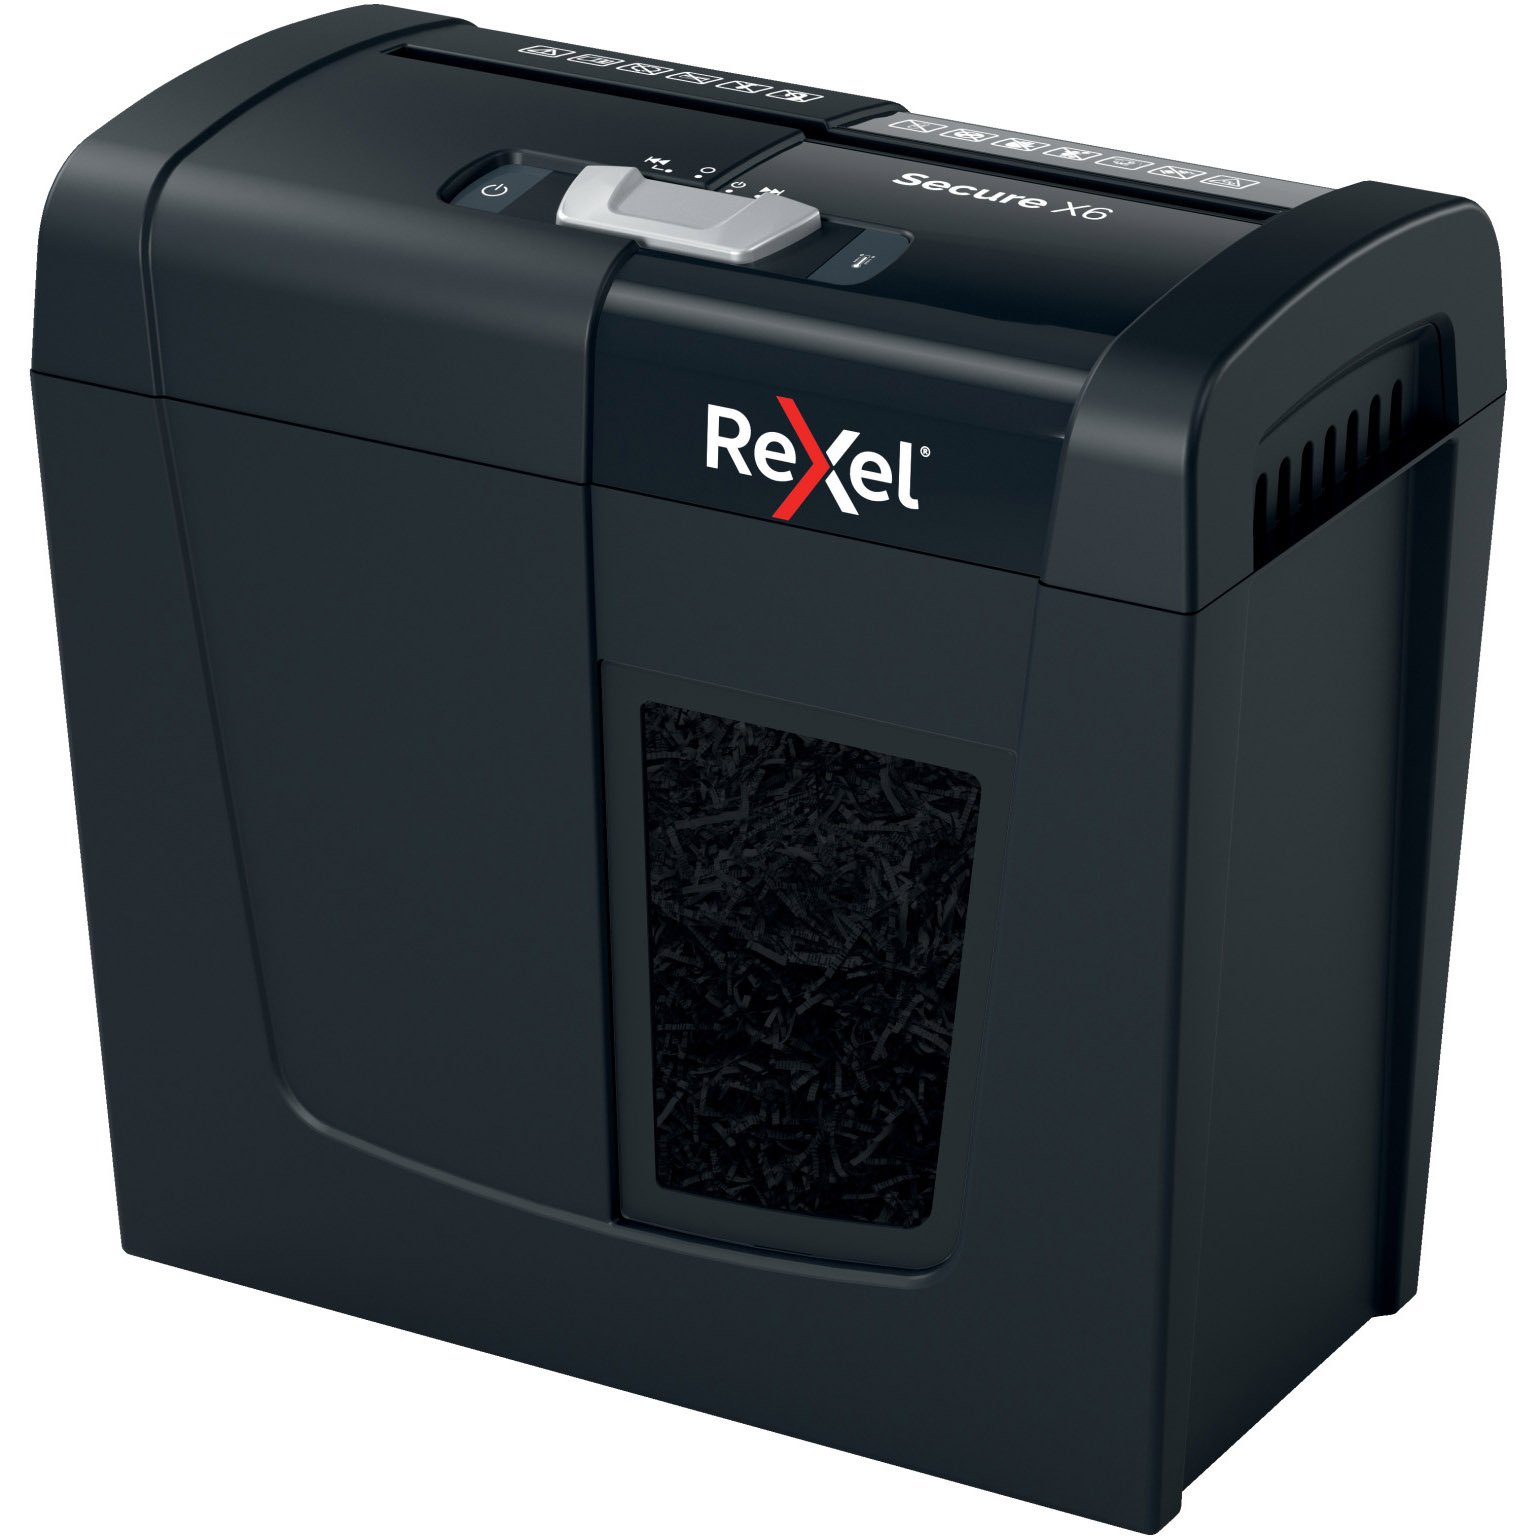 Rexel Secure X6 makulator X6 10 l